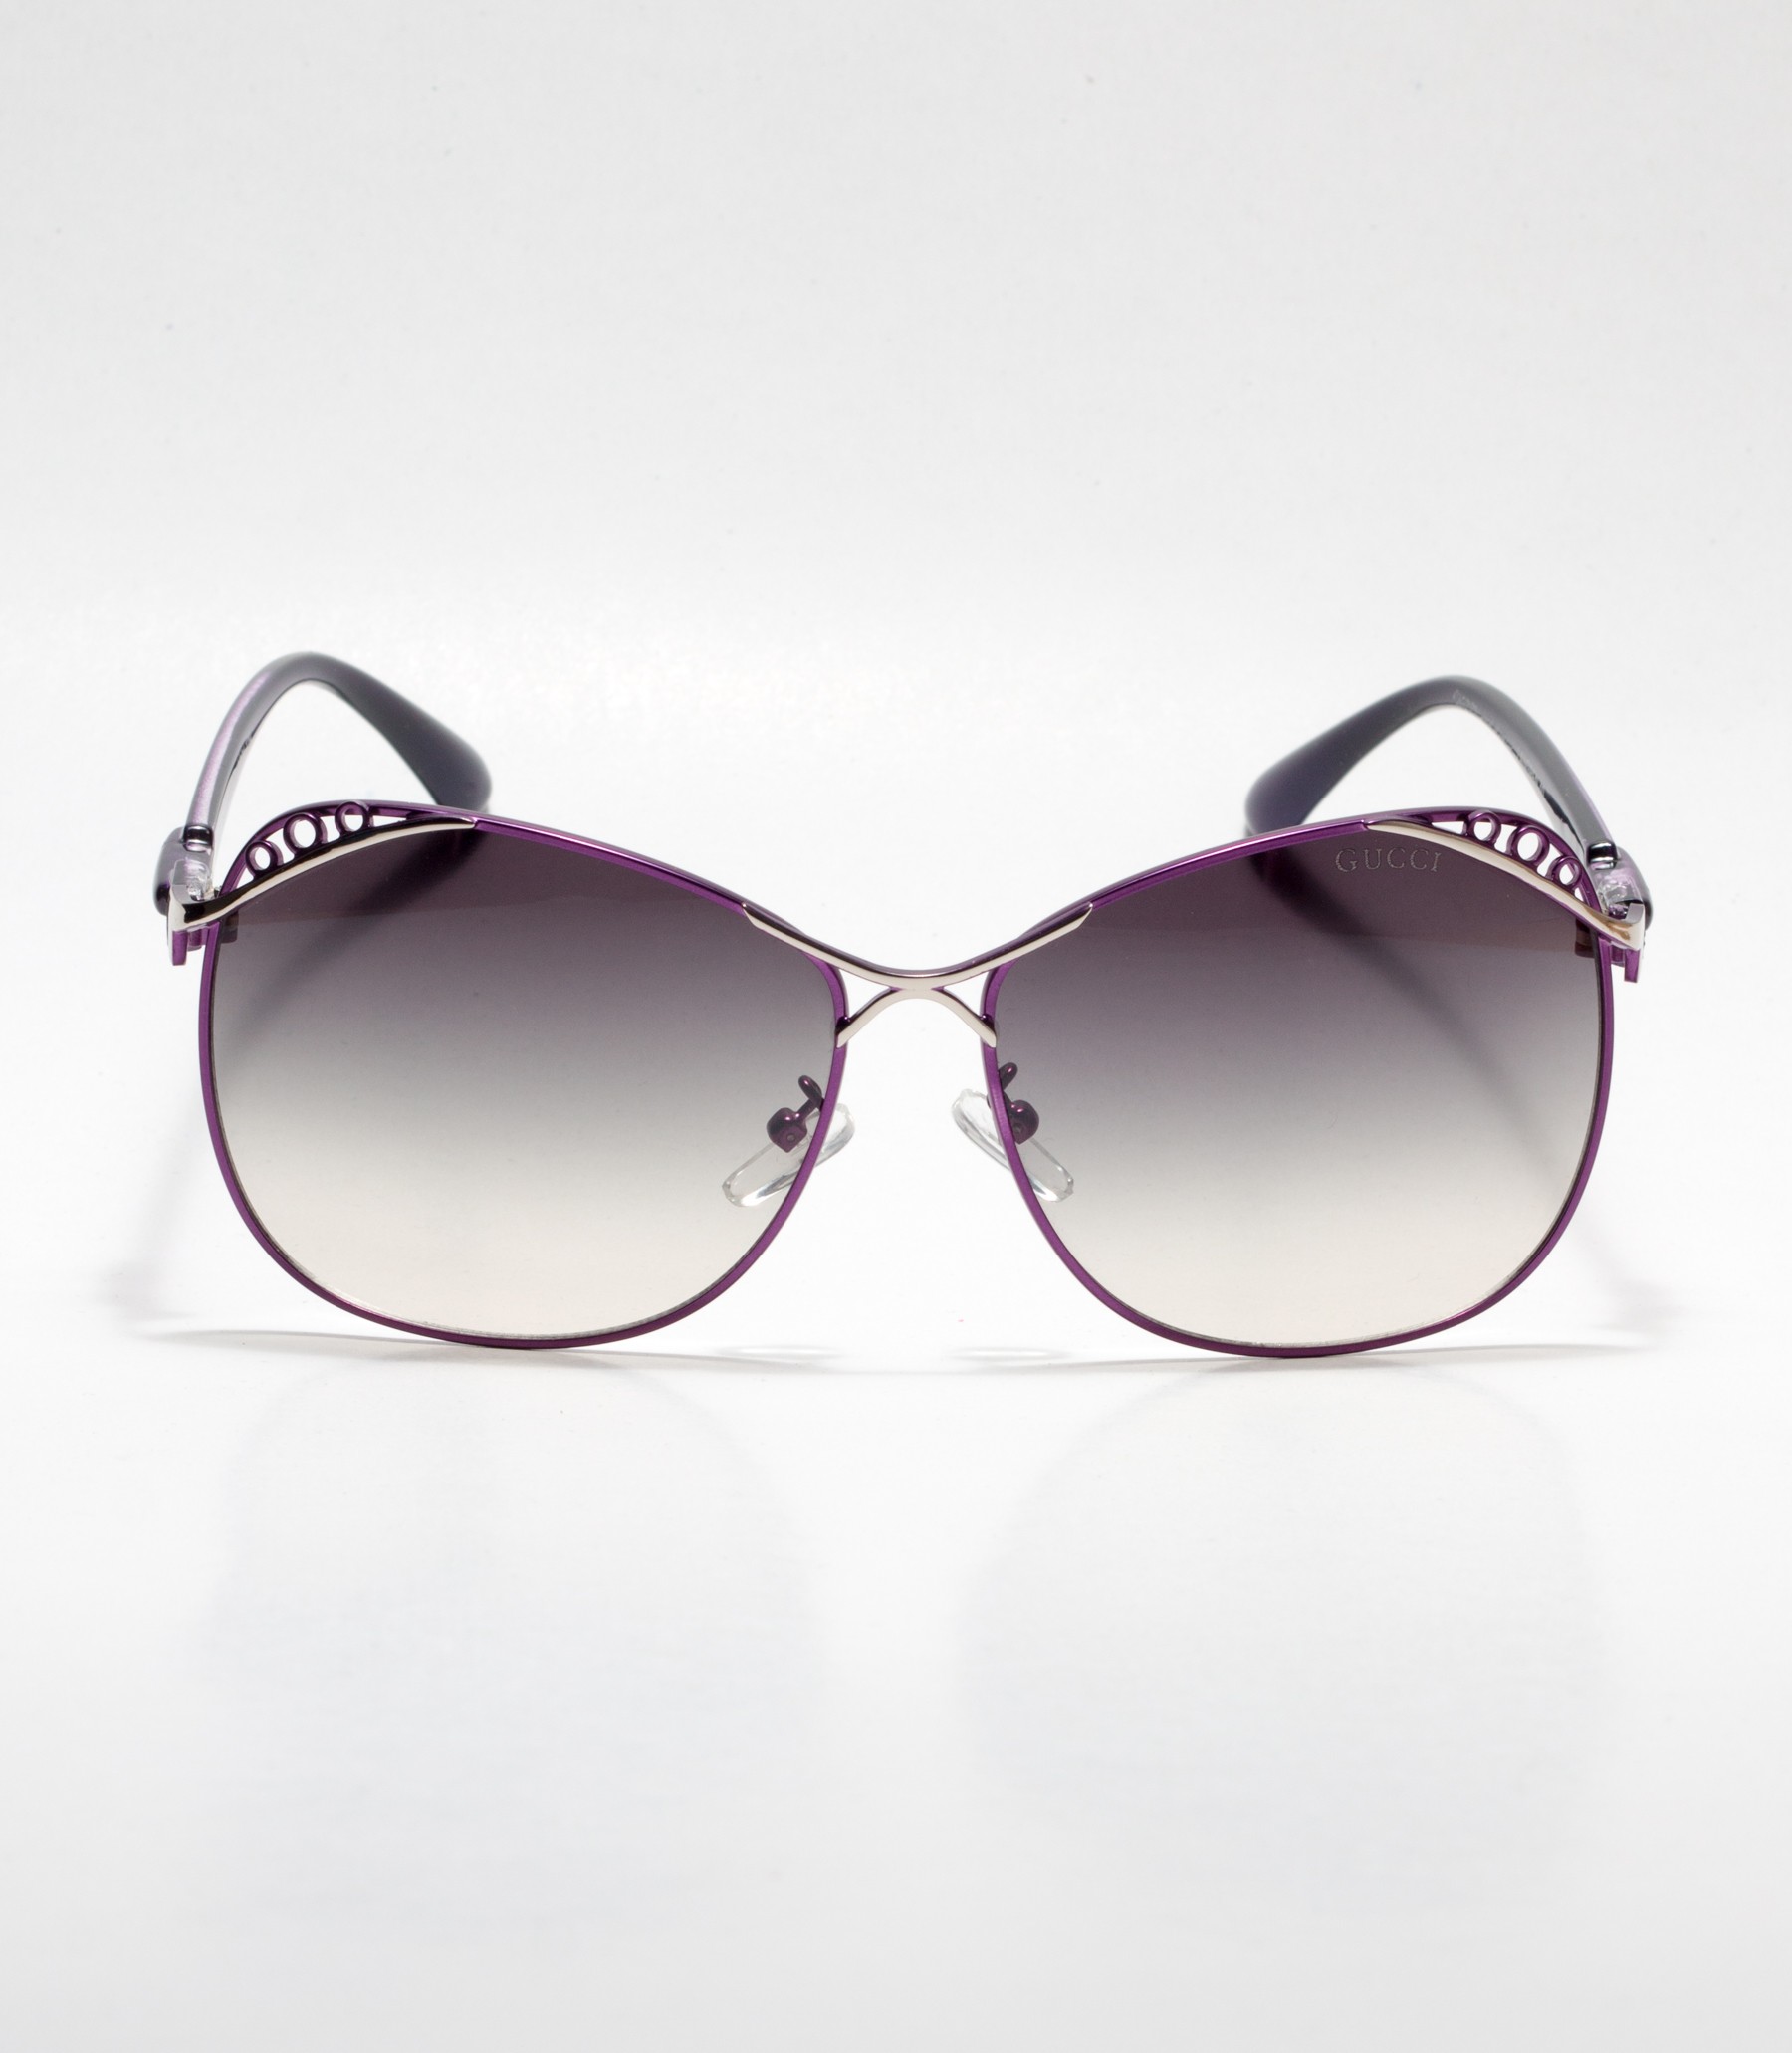 Buy Gucci Designed Frame Purple Ladies Sunglass Online in Bangladesh